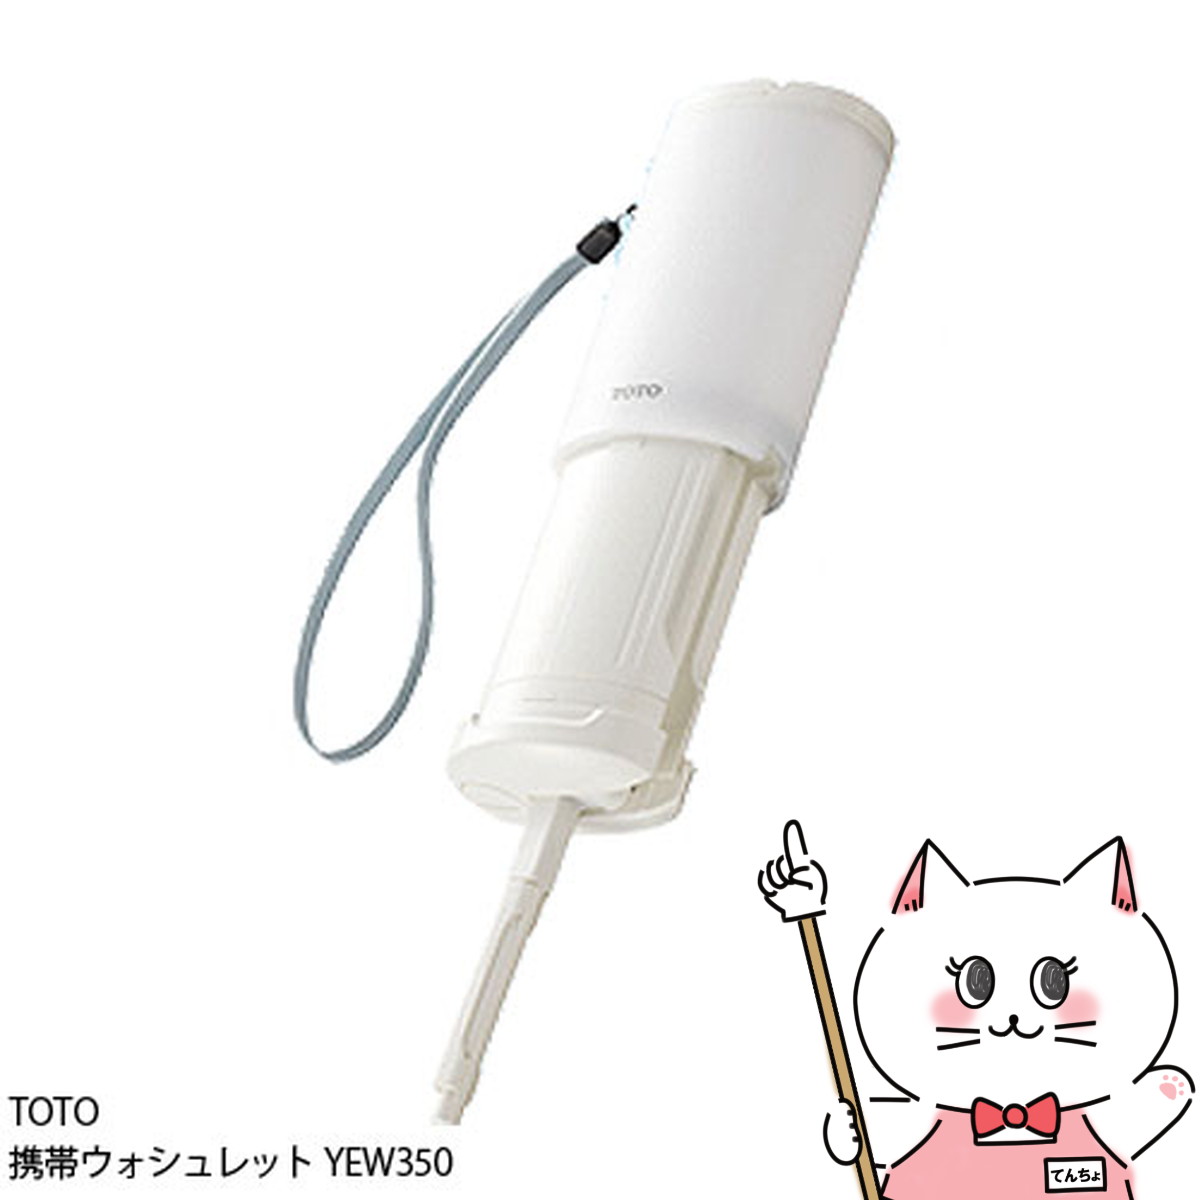 TOTO 携帯ウォシュレット YEW350 【宅配便送料無料】 (6049799)